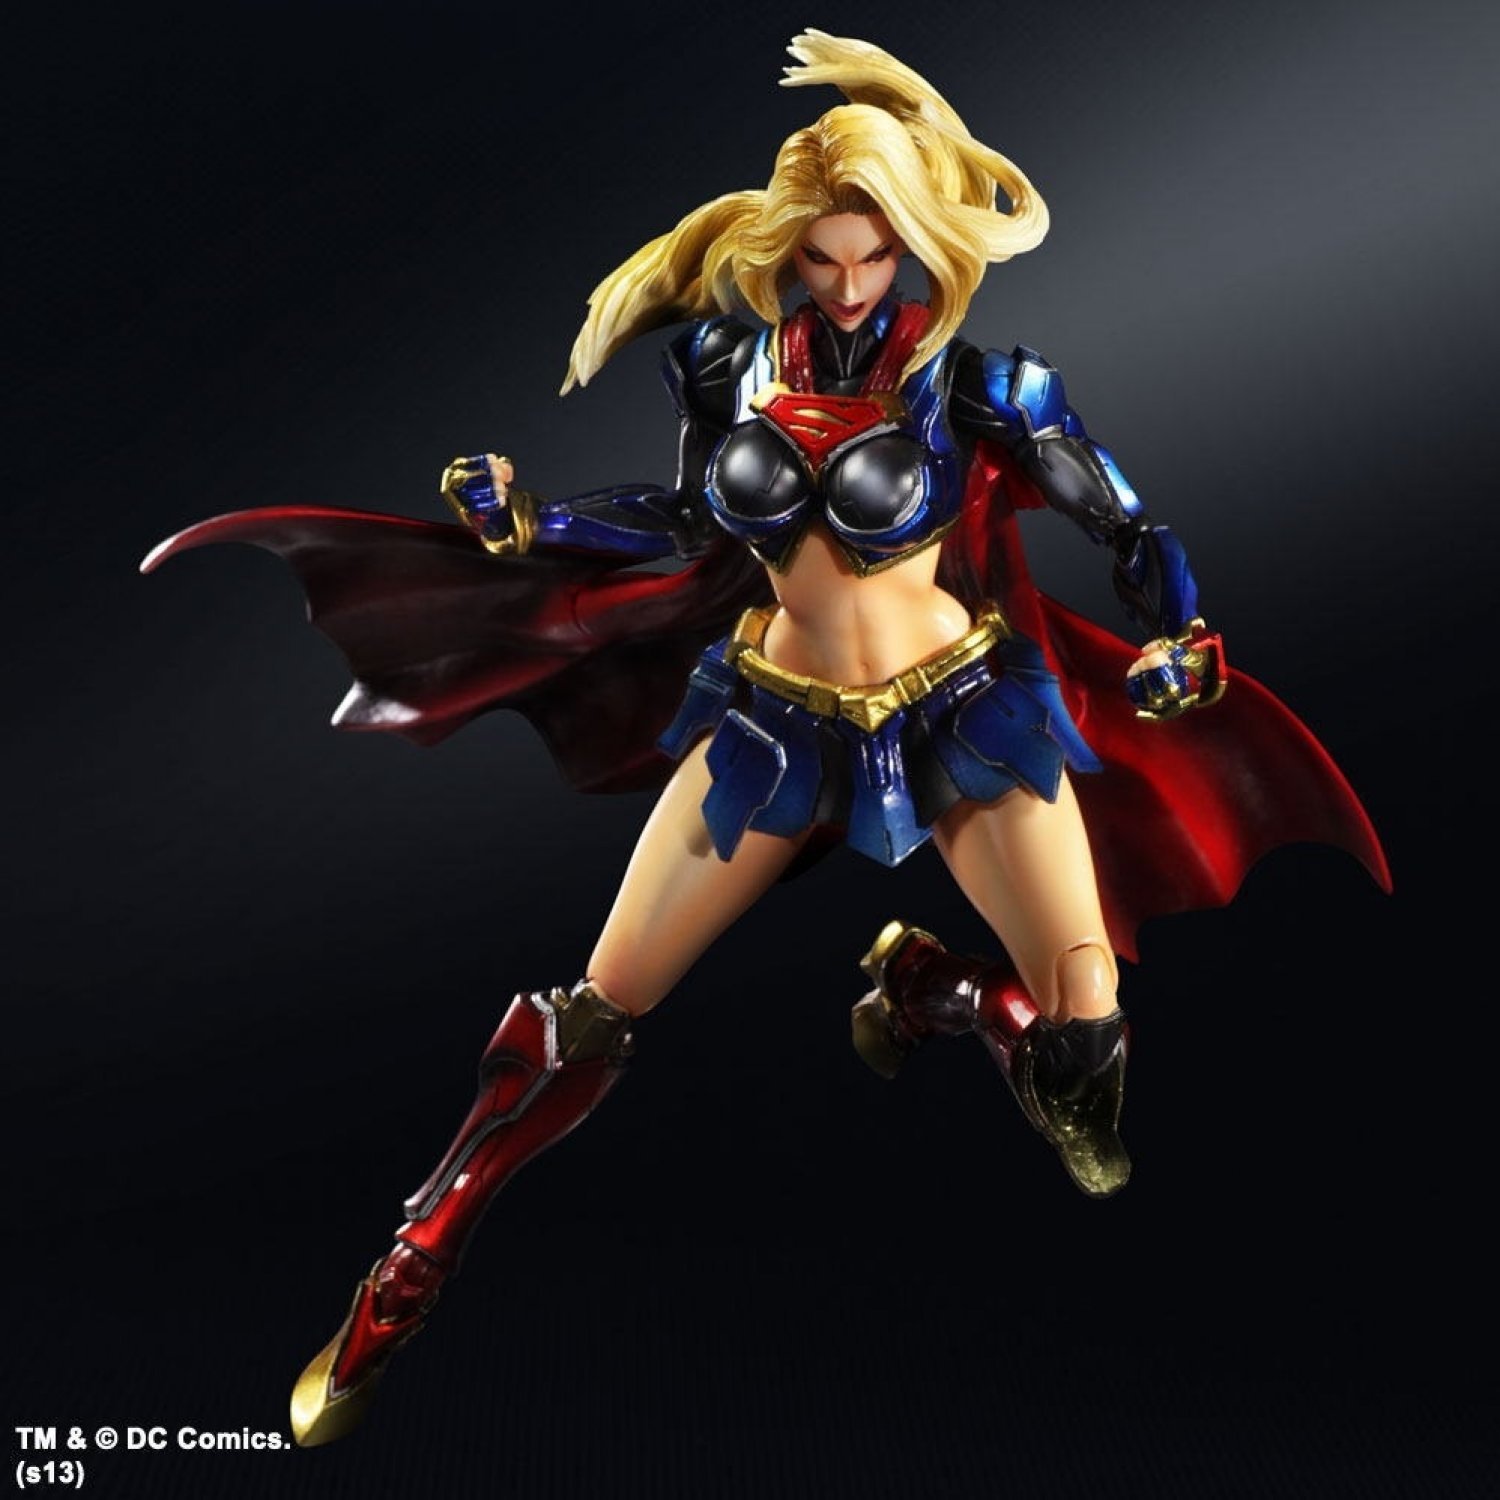 ДС комикс фигурка Супергерл (копия) — Supergirl DC Comics Play Arts Kai (copy)